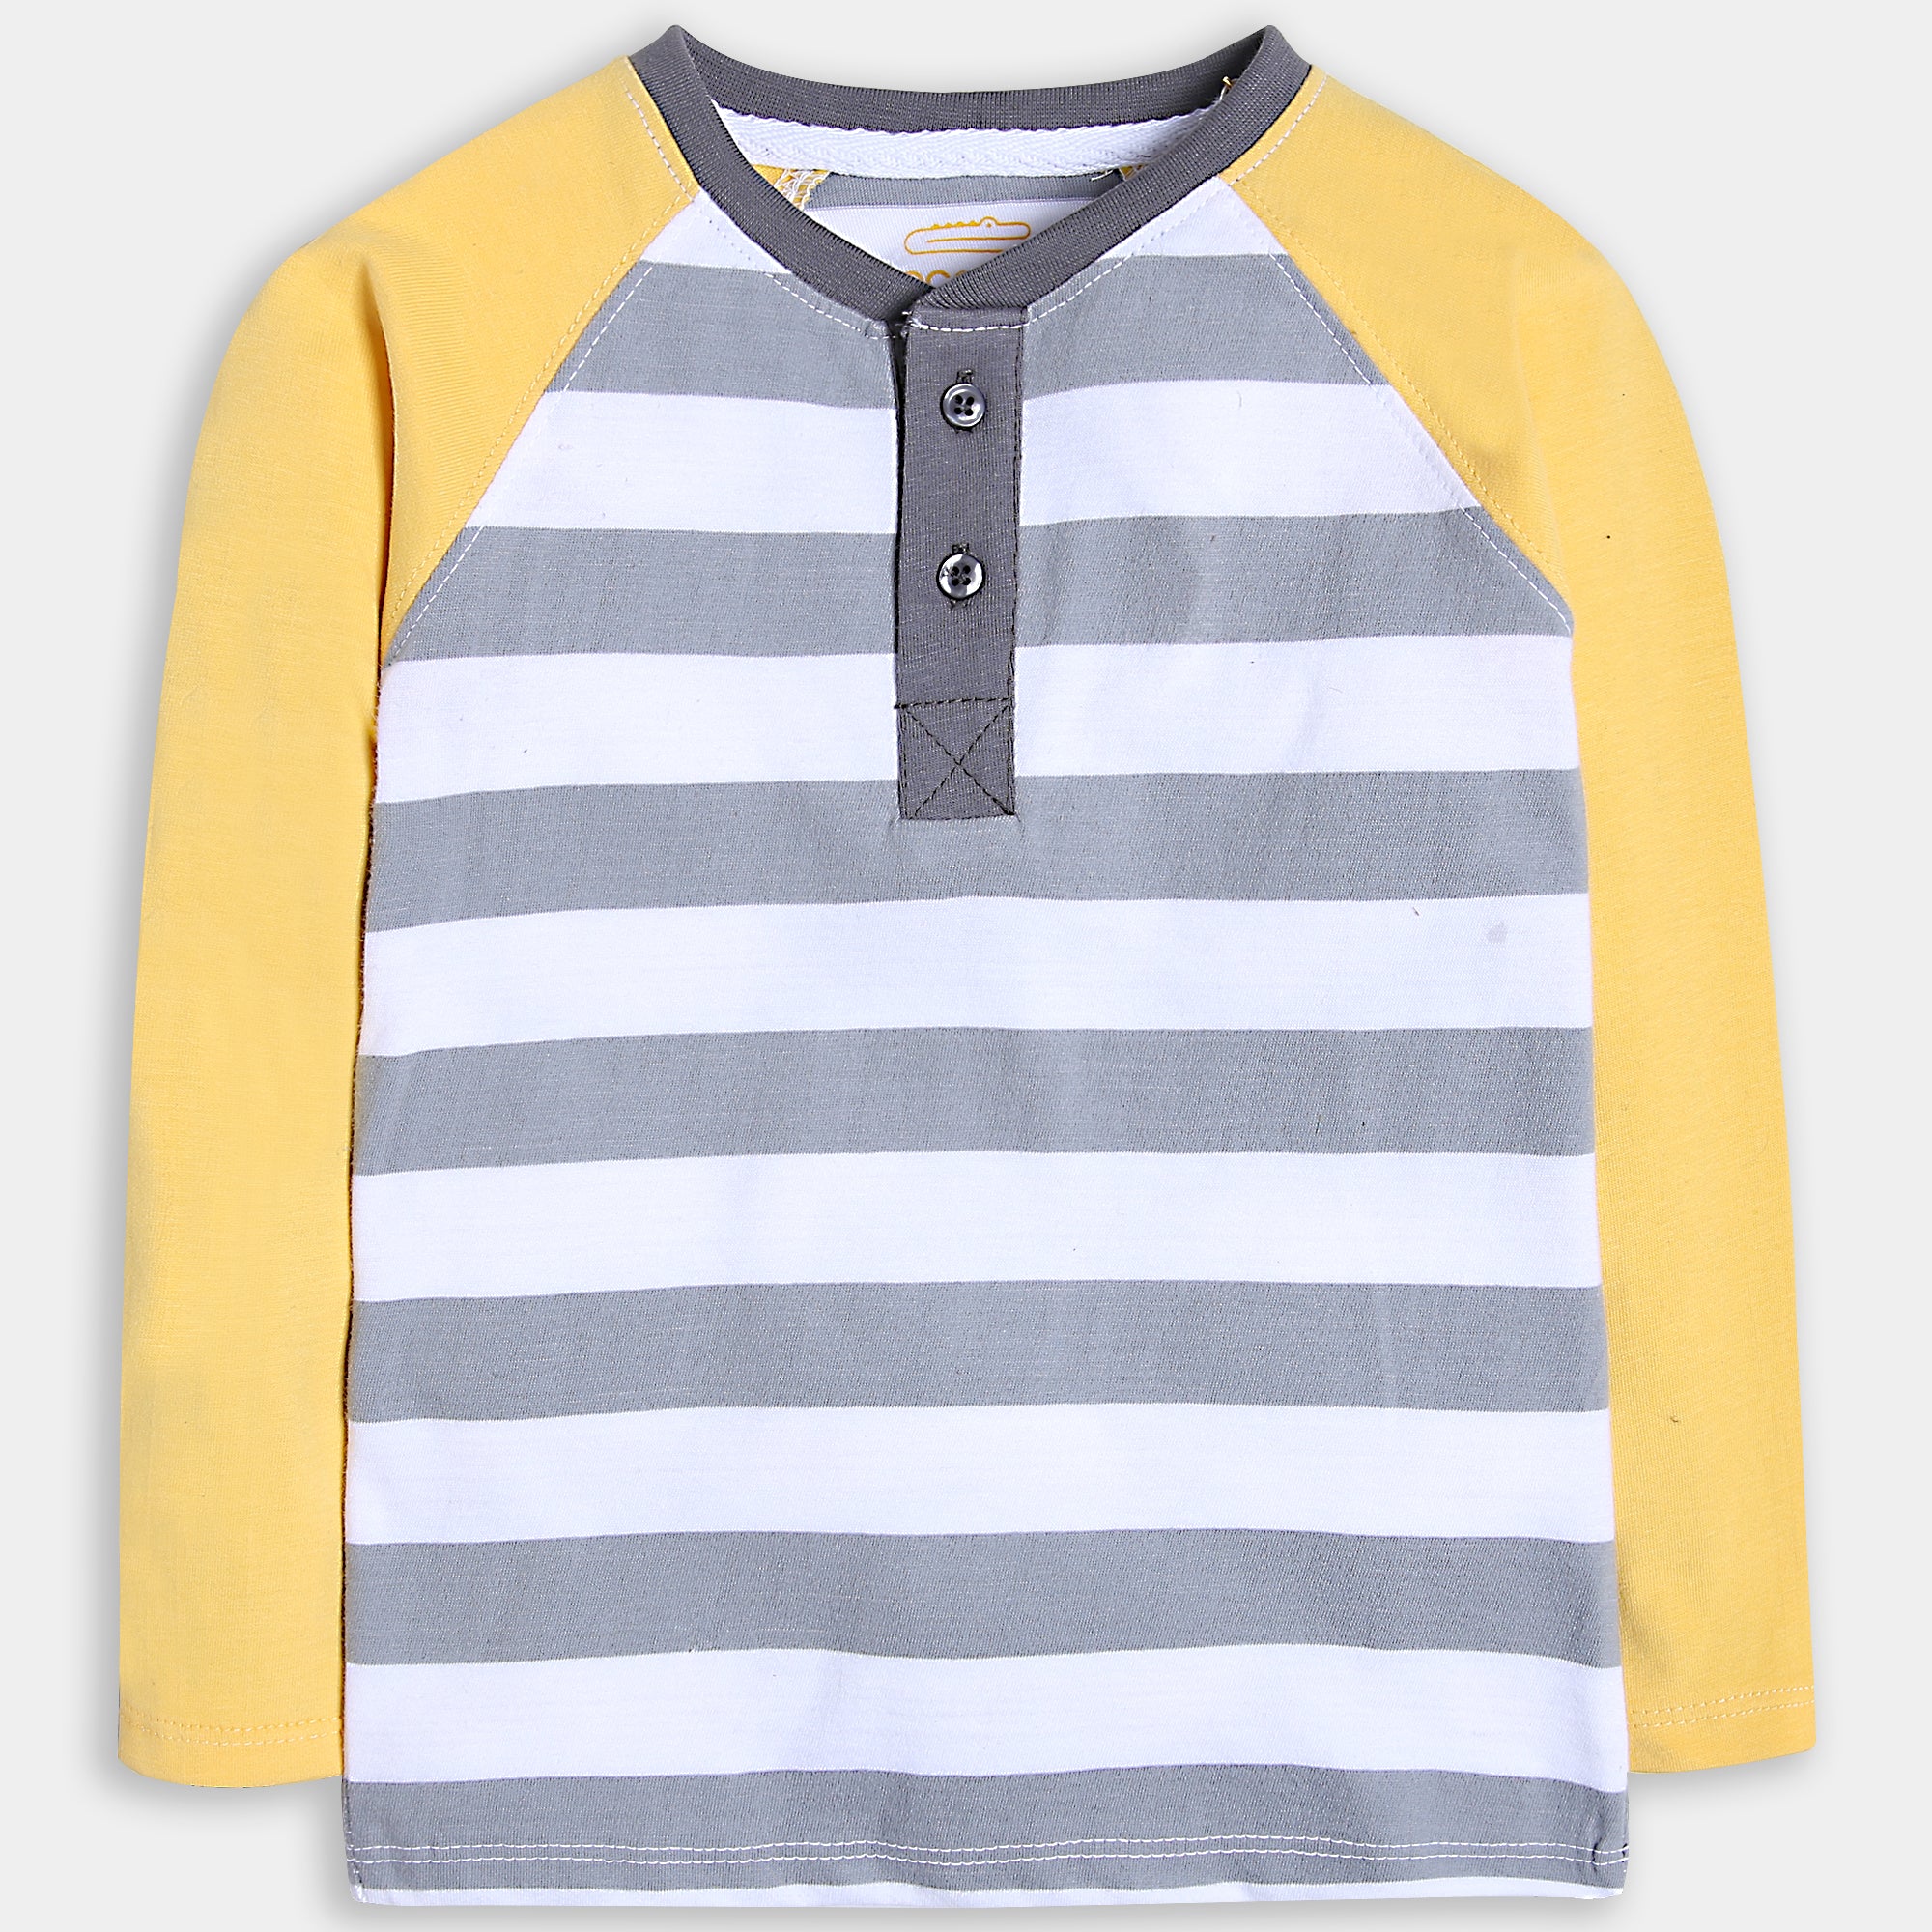 Gray Striped Shirt